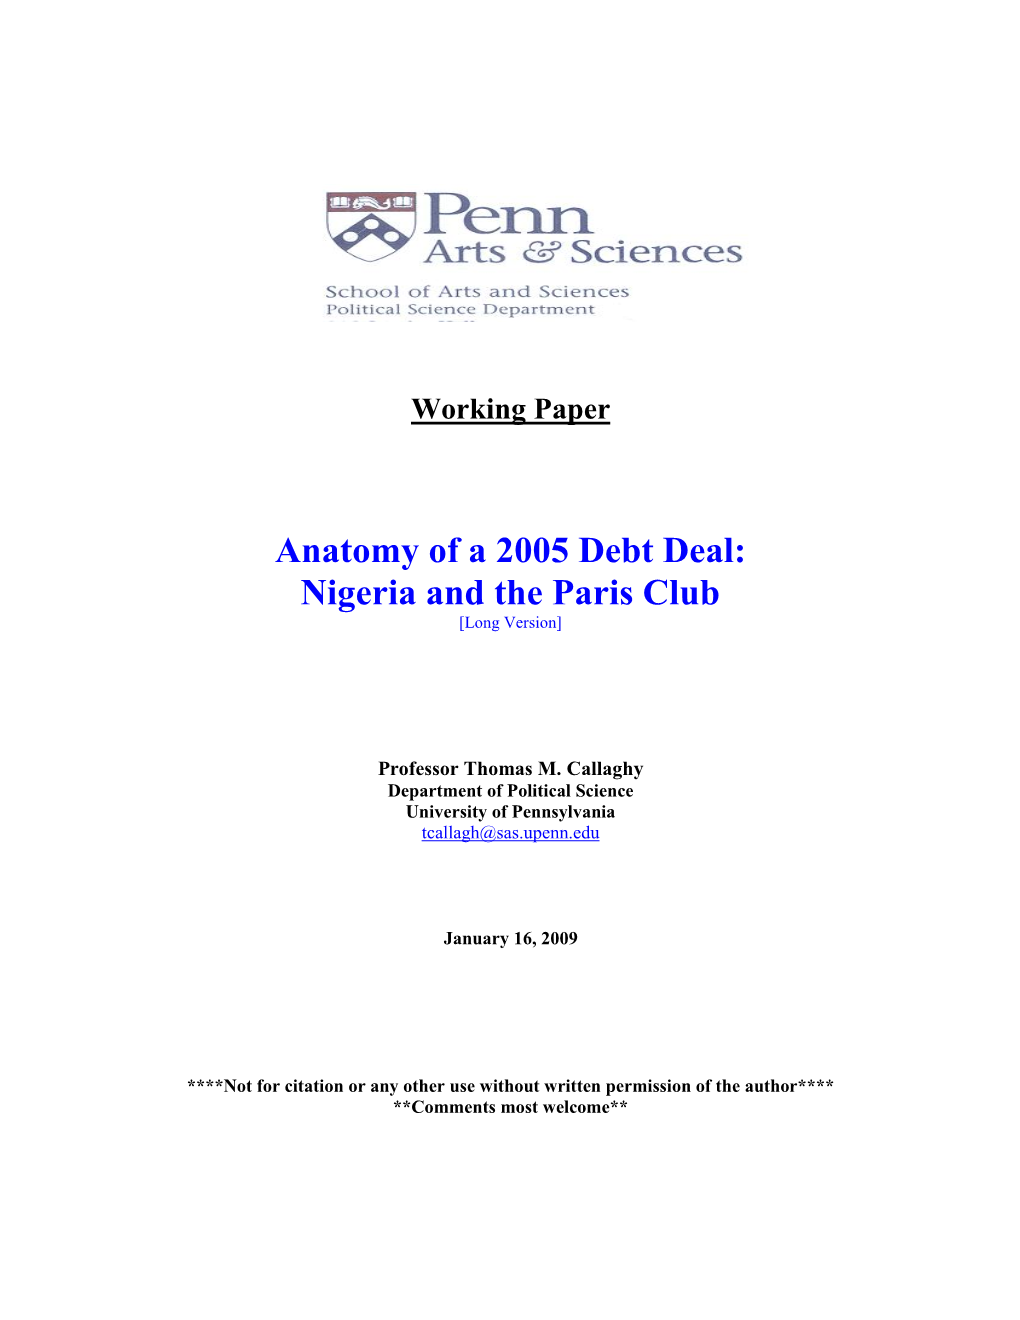 Nigeria and the Paris Club [Long Version]